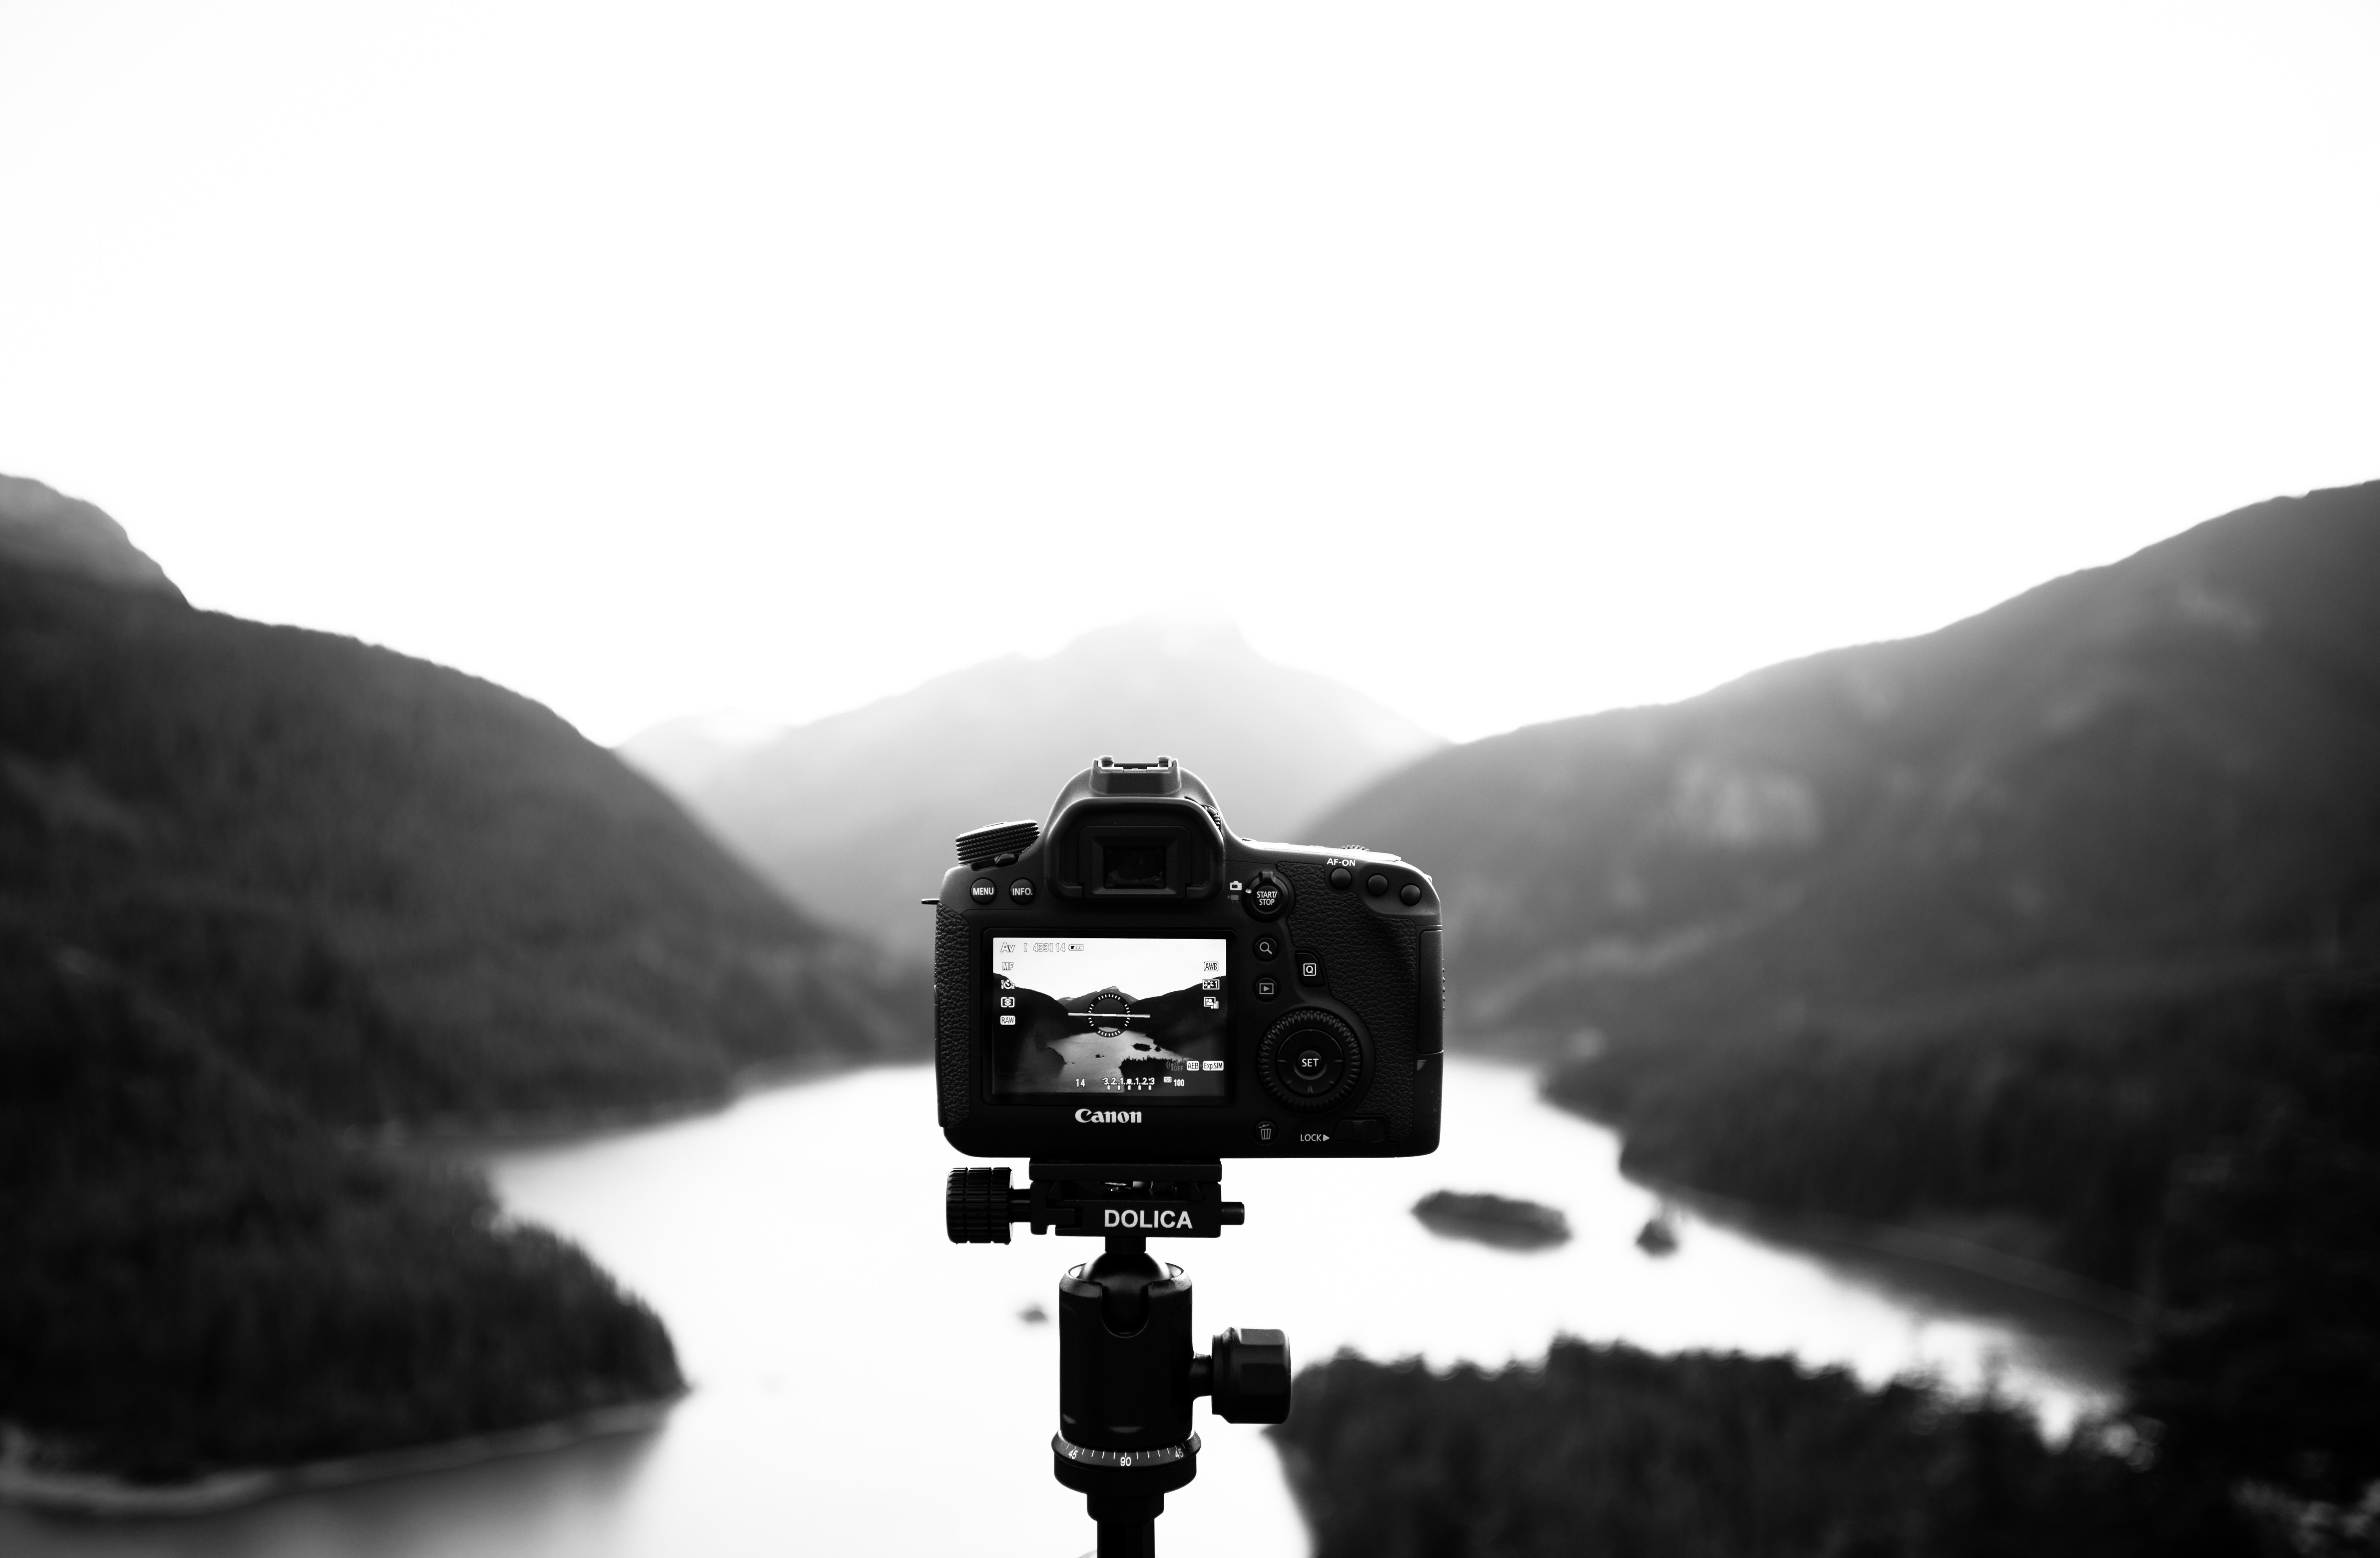 Capturing the landscape photo